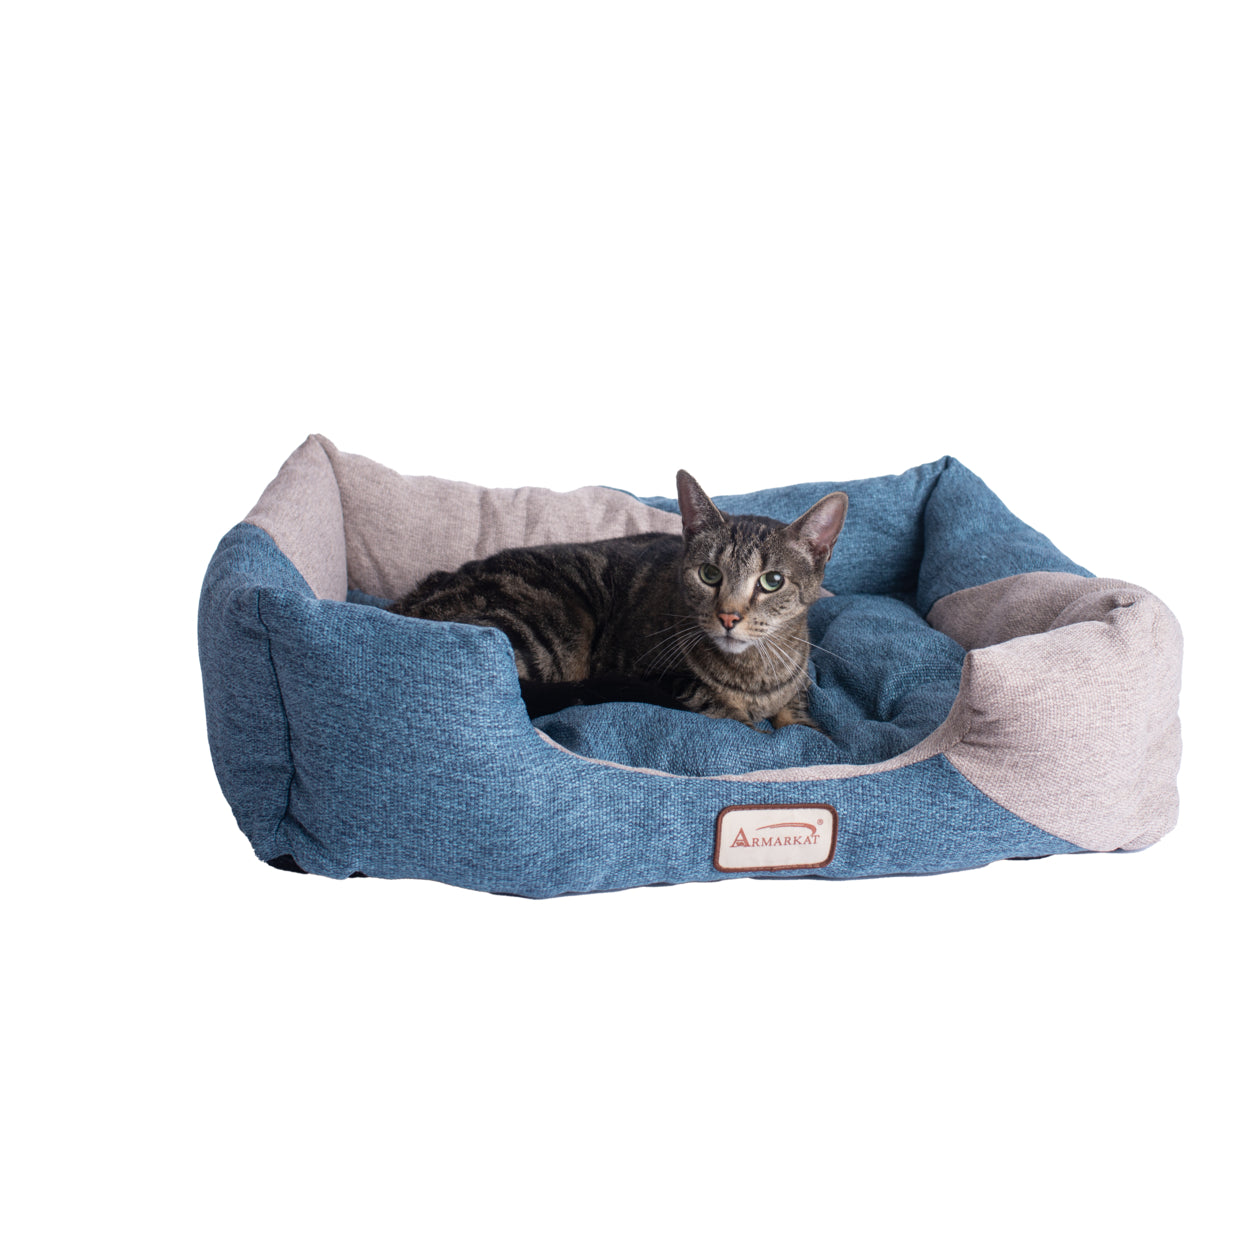 Armarkat Cat Bed Model C47， navy blue and beige